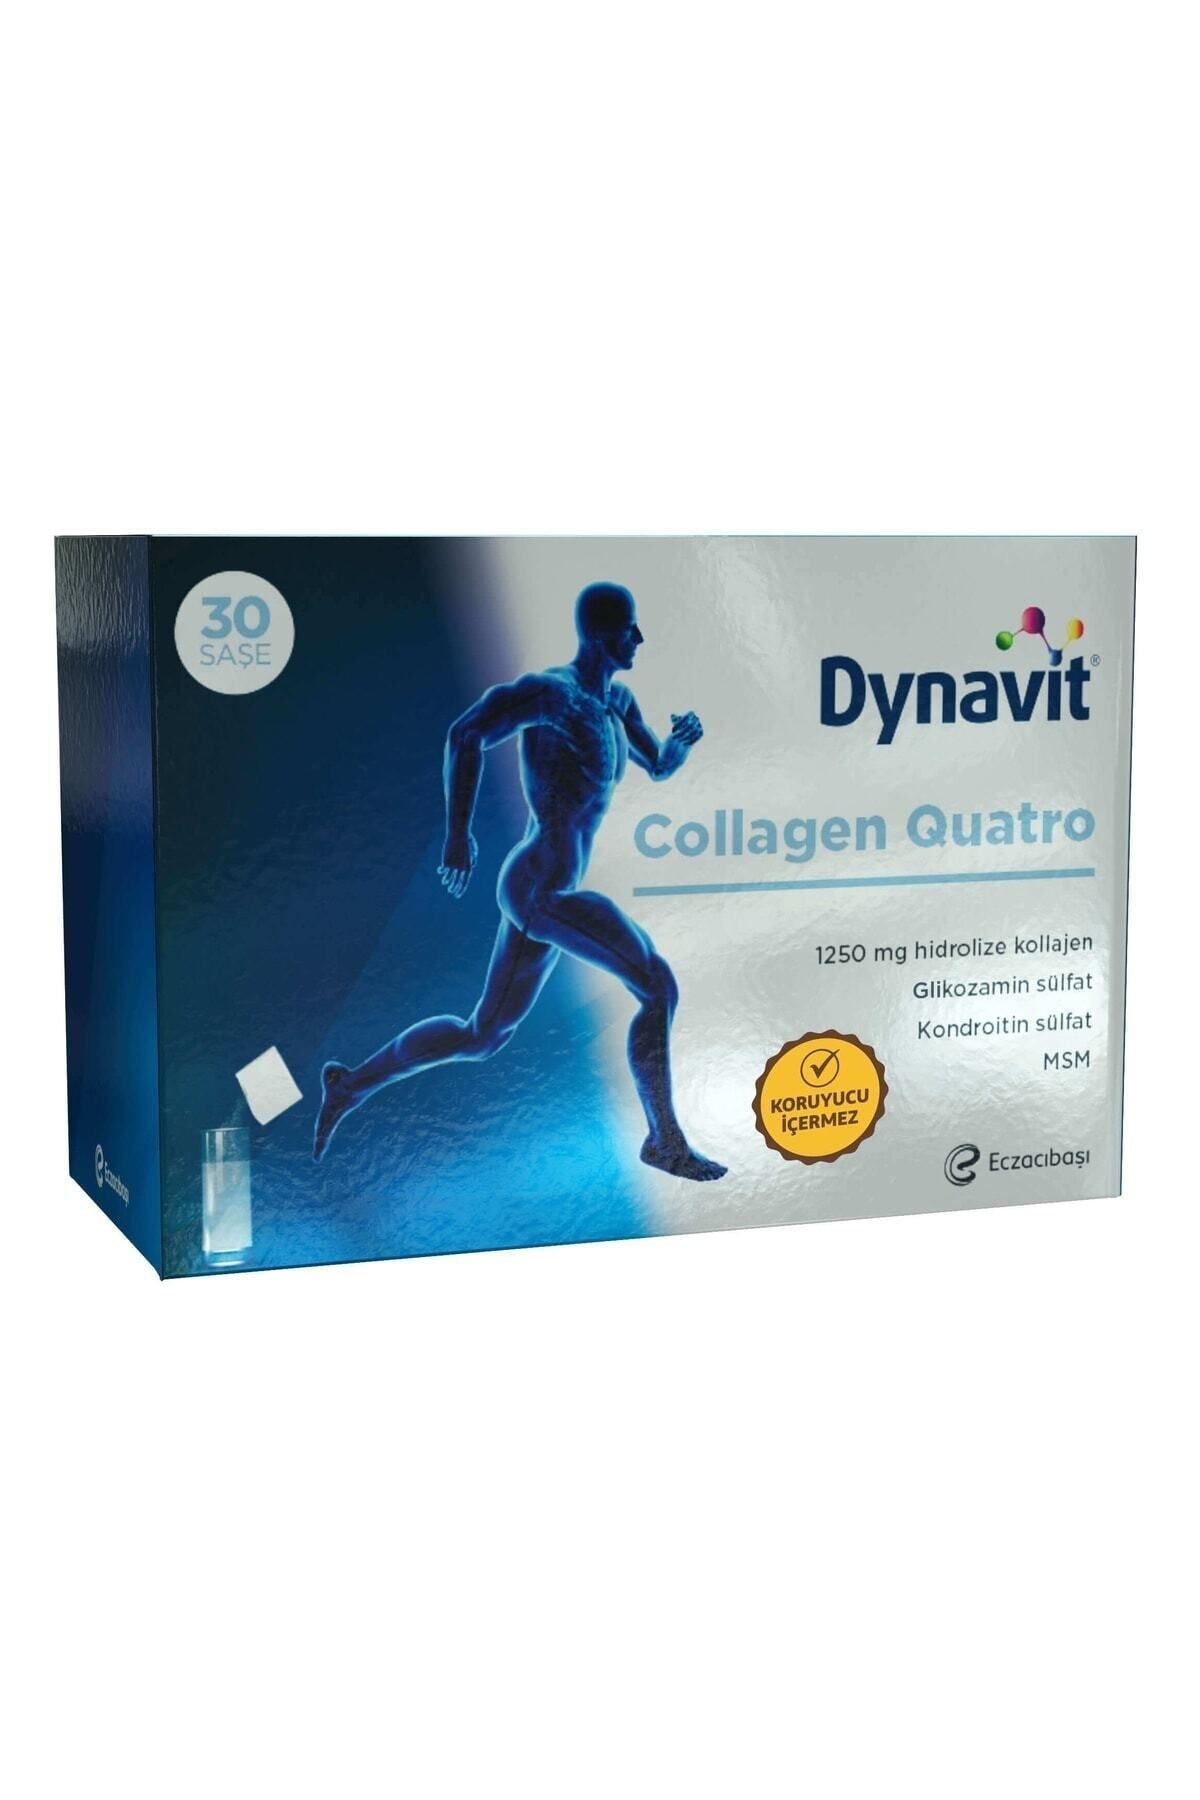 Dynavit Collagen Quatro Saşe 30 Saşe